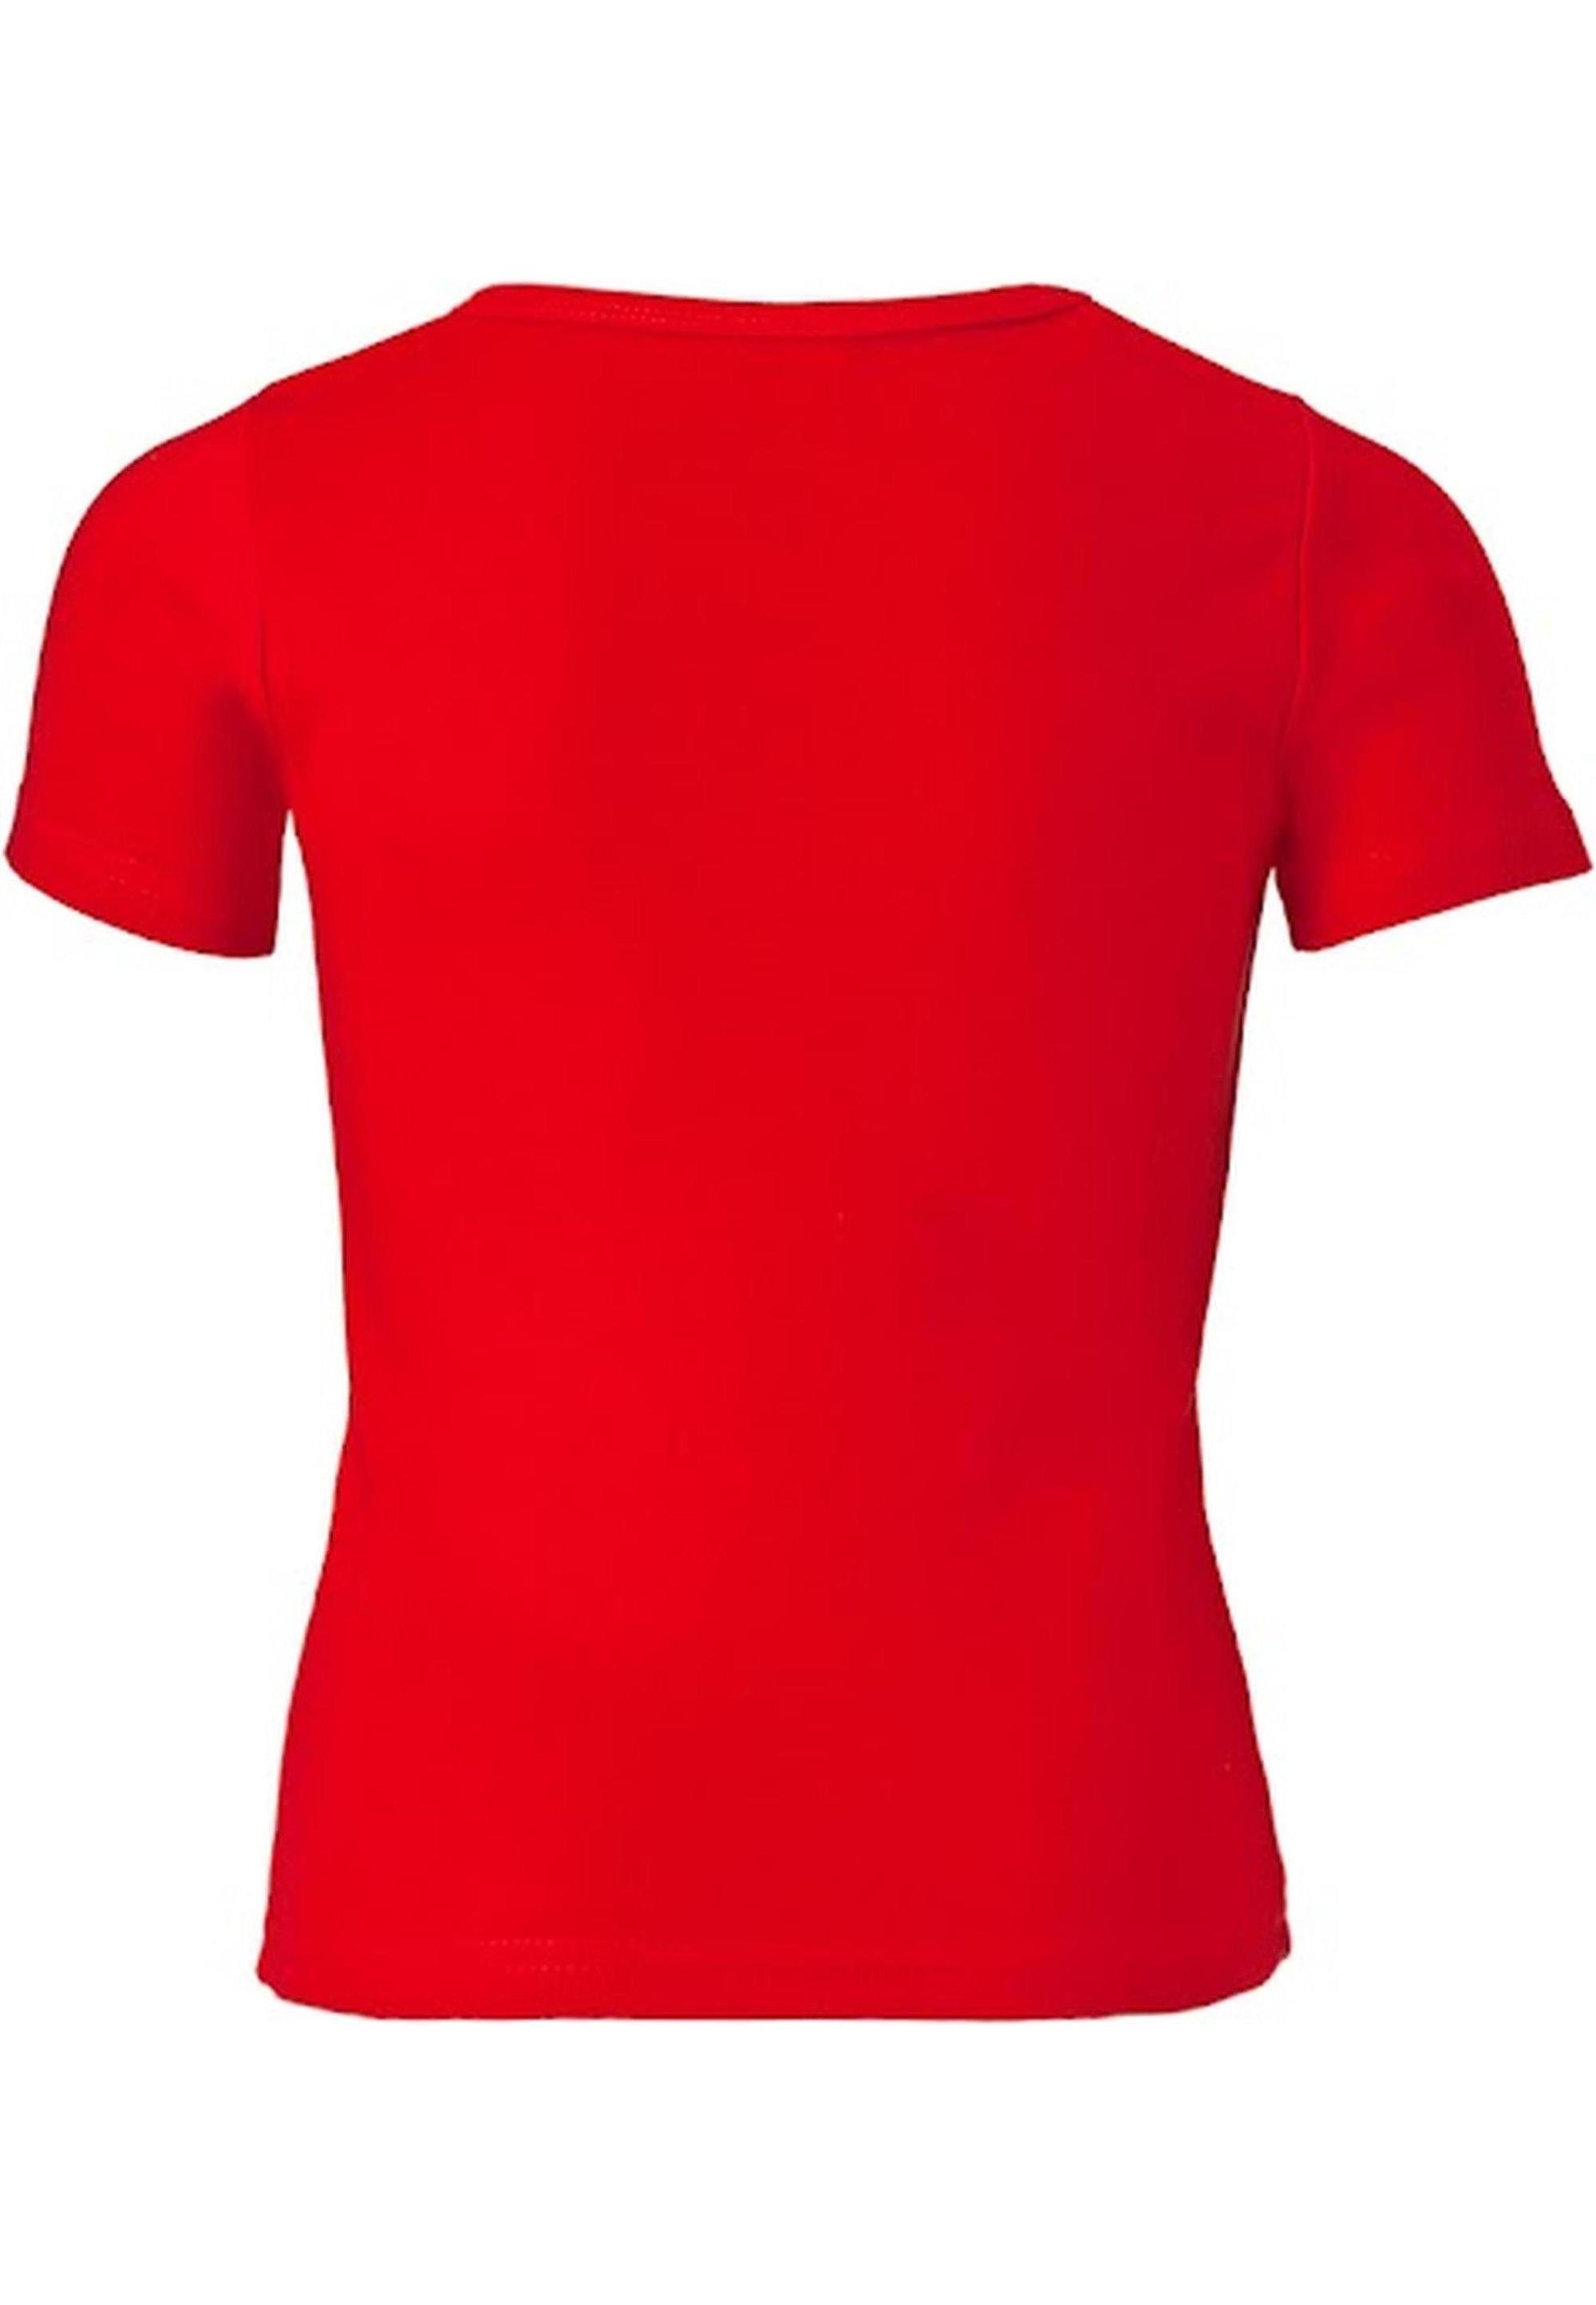 T-Shirt Originaldesign mit Maus lizenziertem Die LOGOSHIRT rot